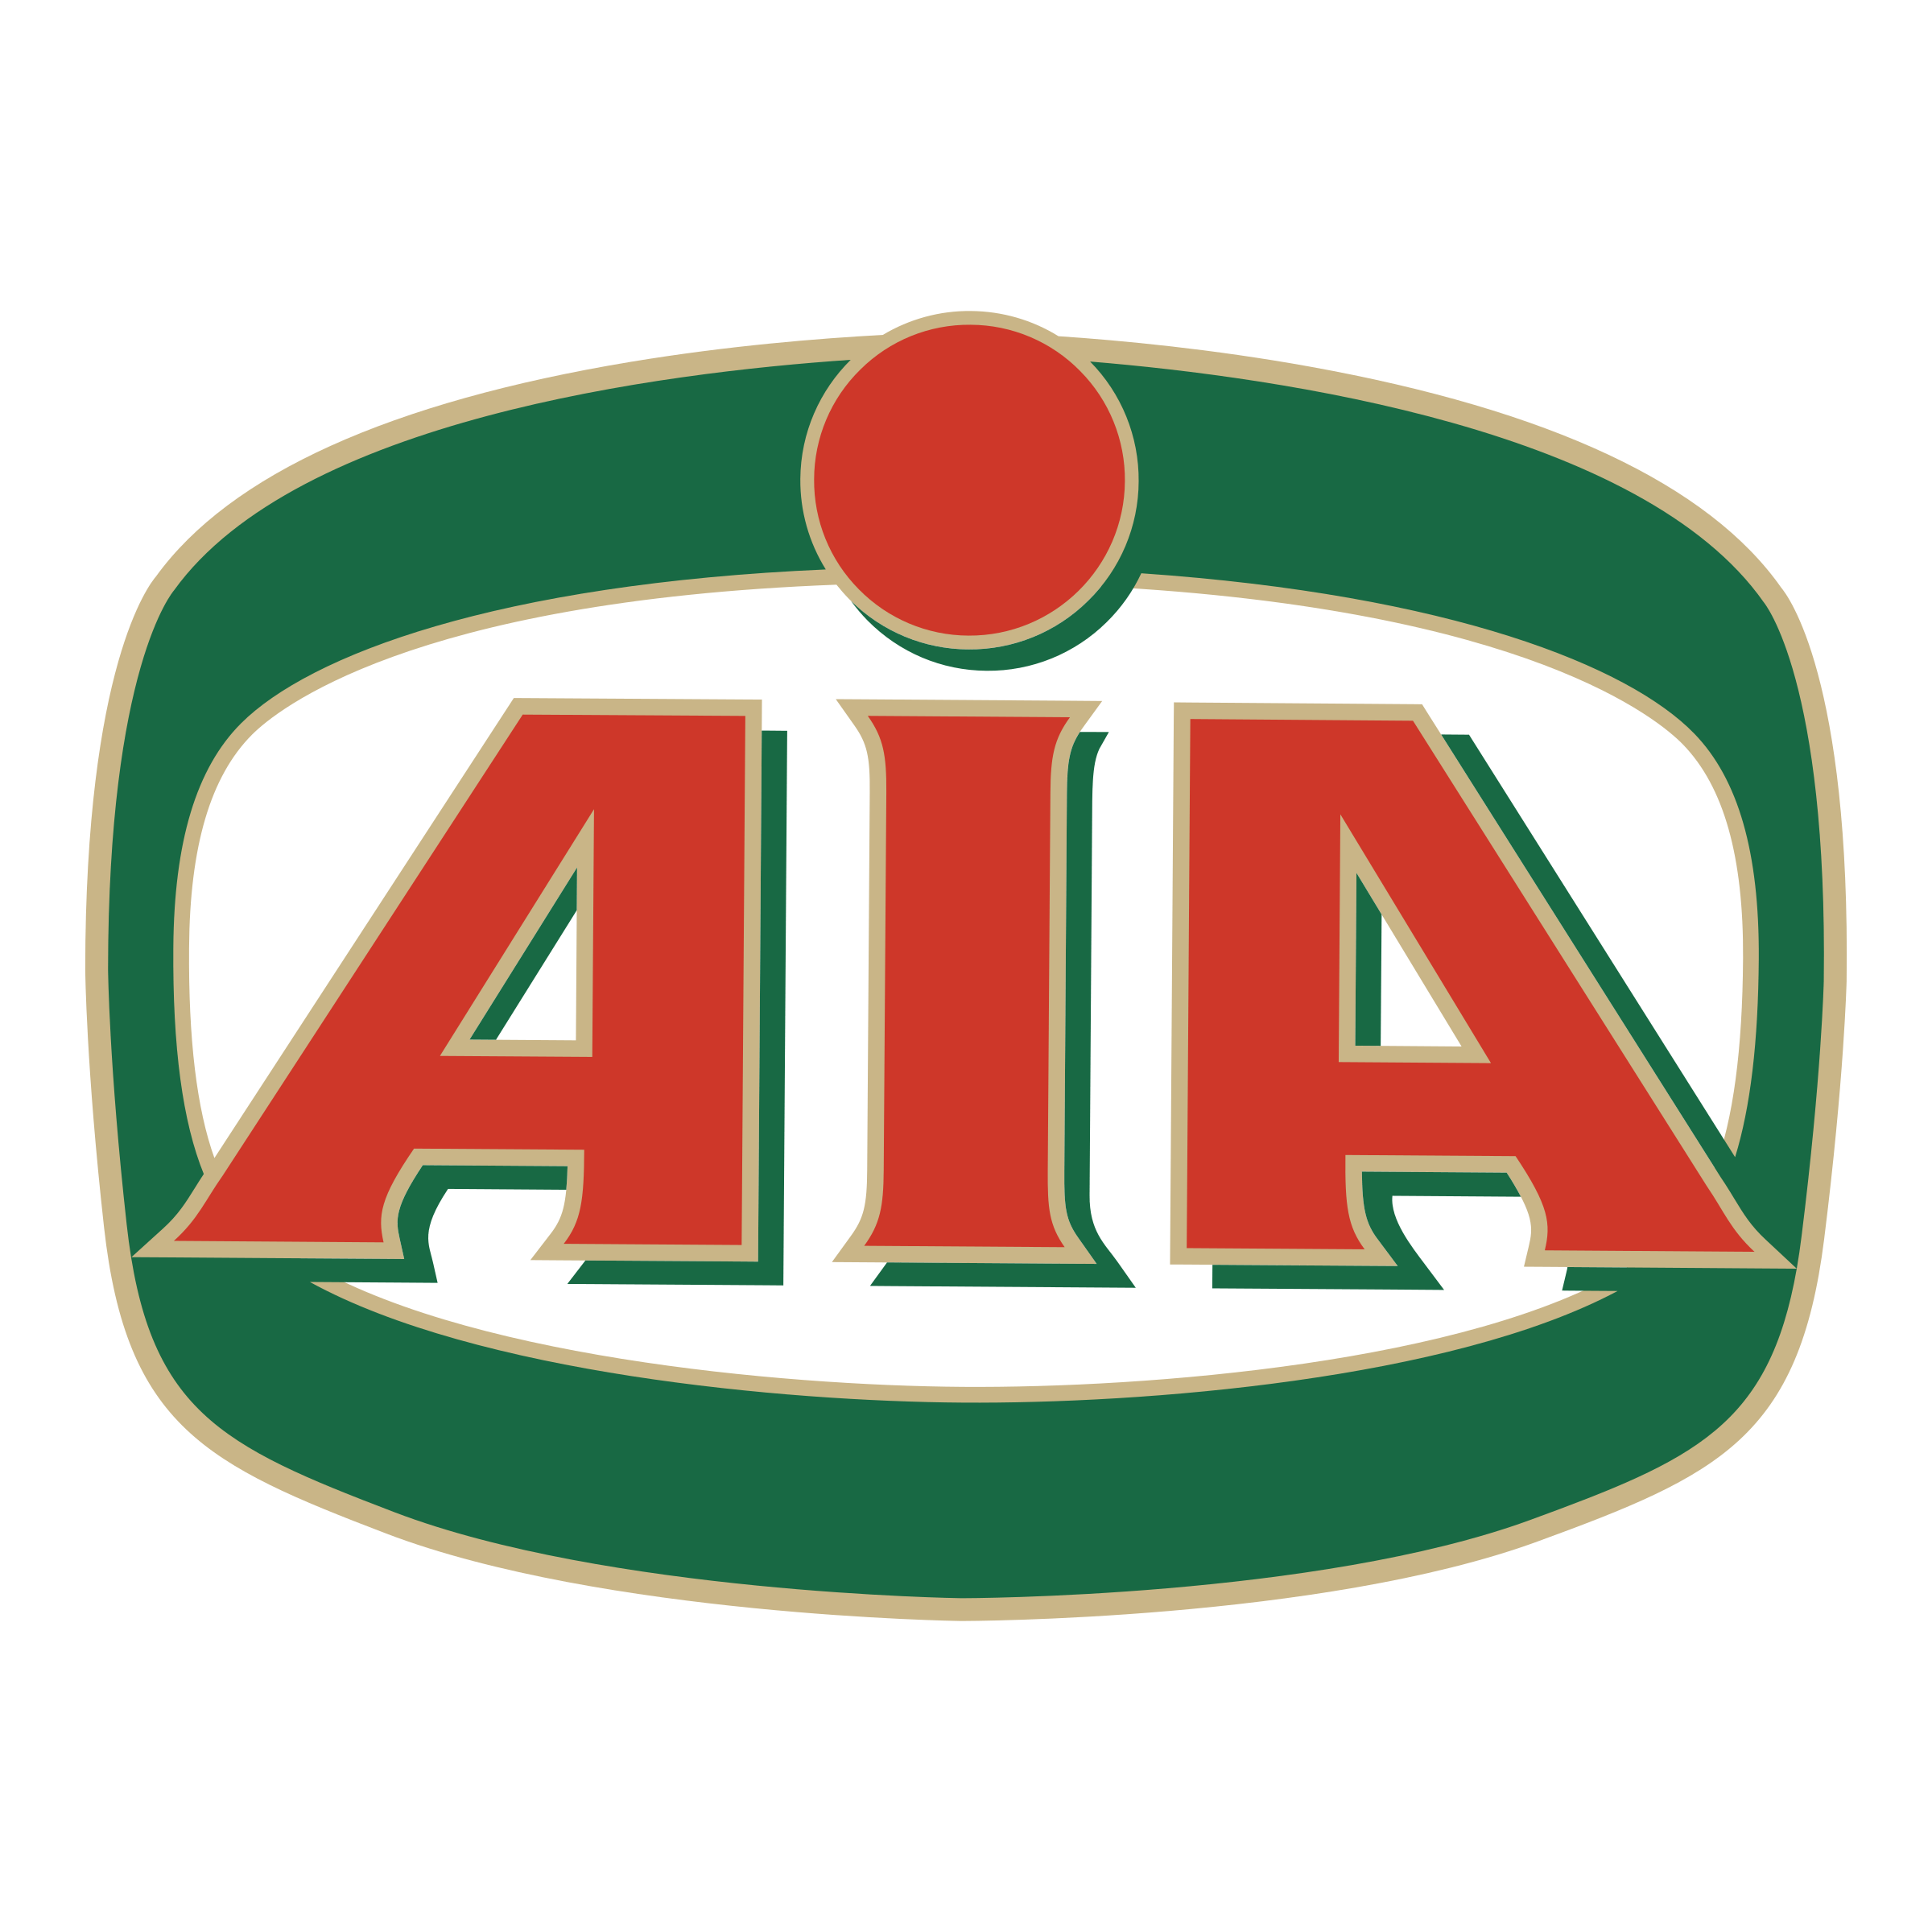 AIA Logo - Aia Logo PNG Transparent & SVG Vector - Freebie Supply